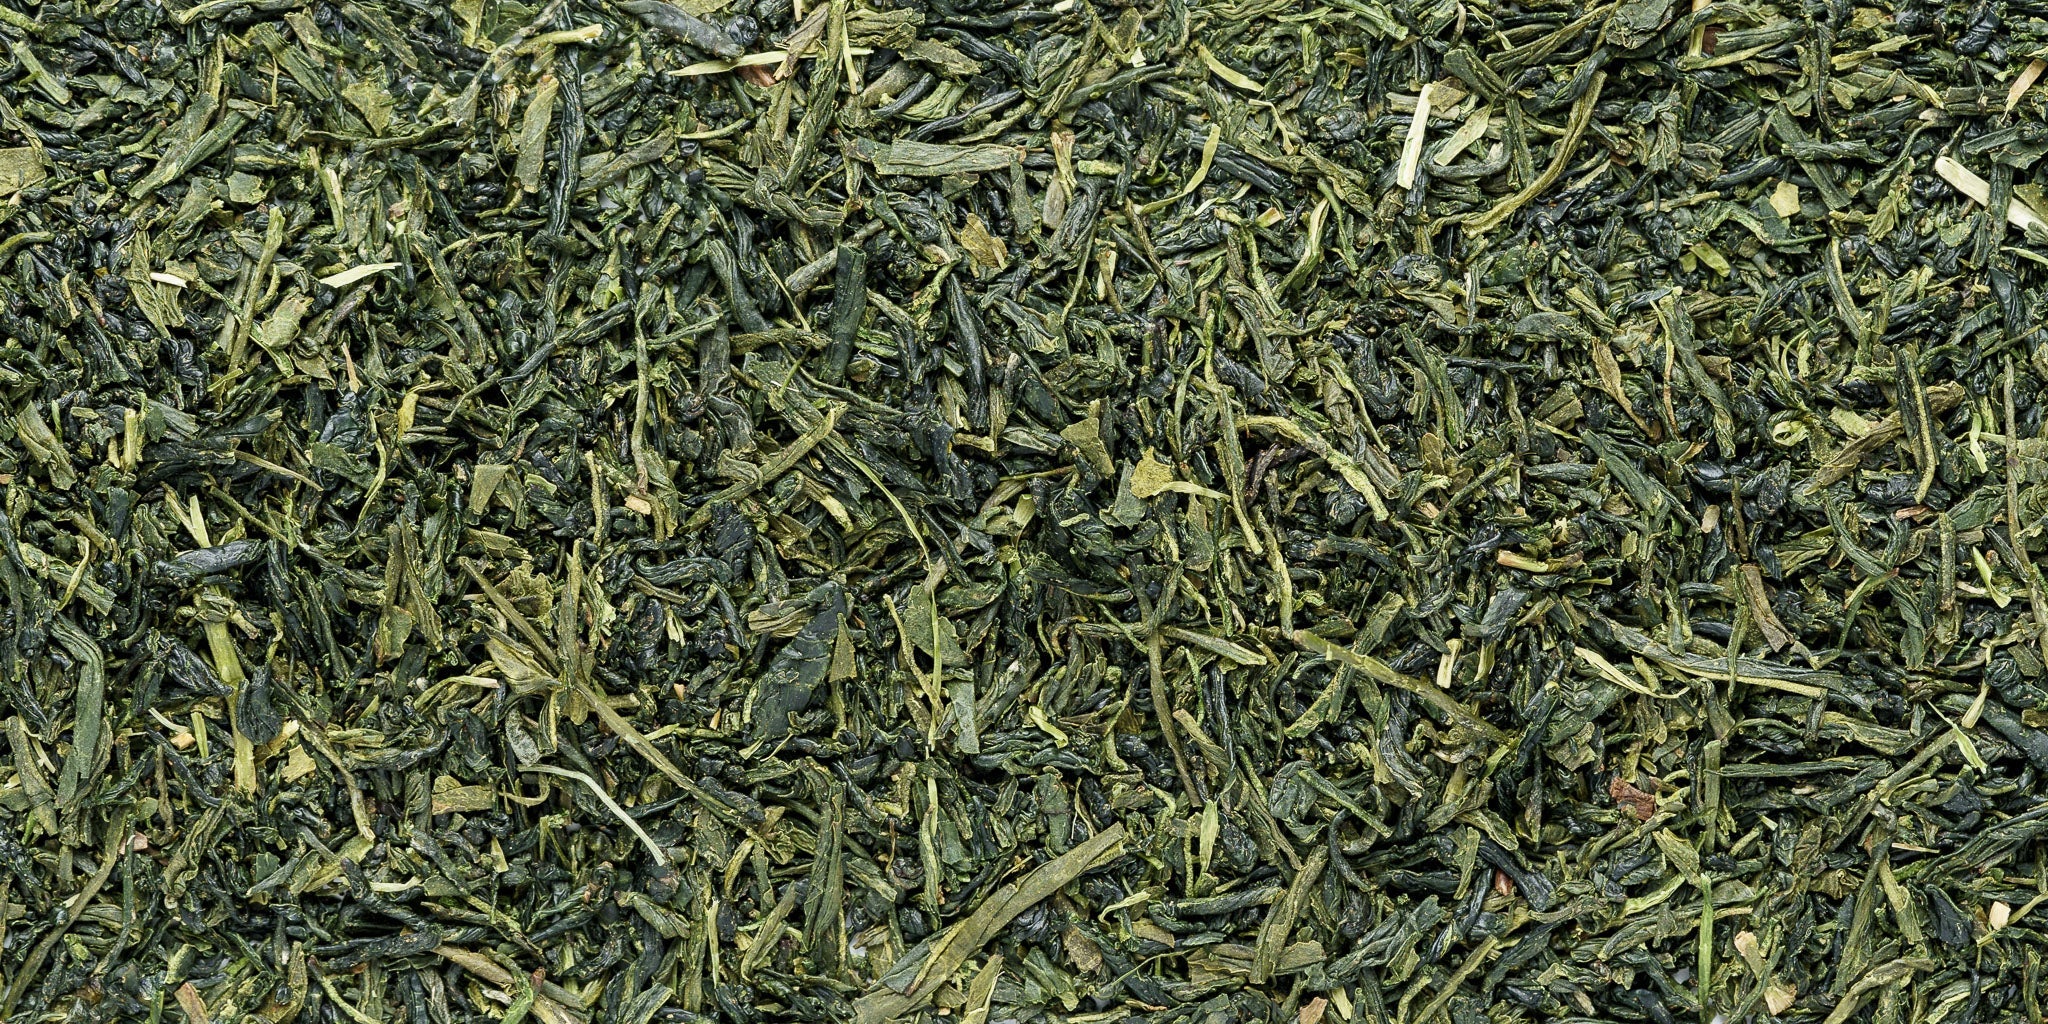 Grüner Tee aus Japan